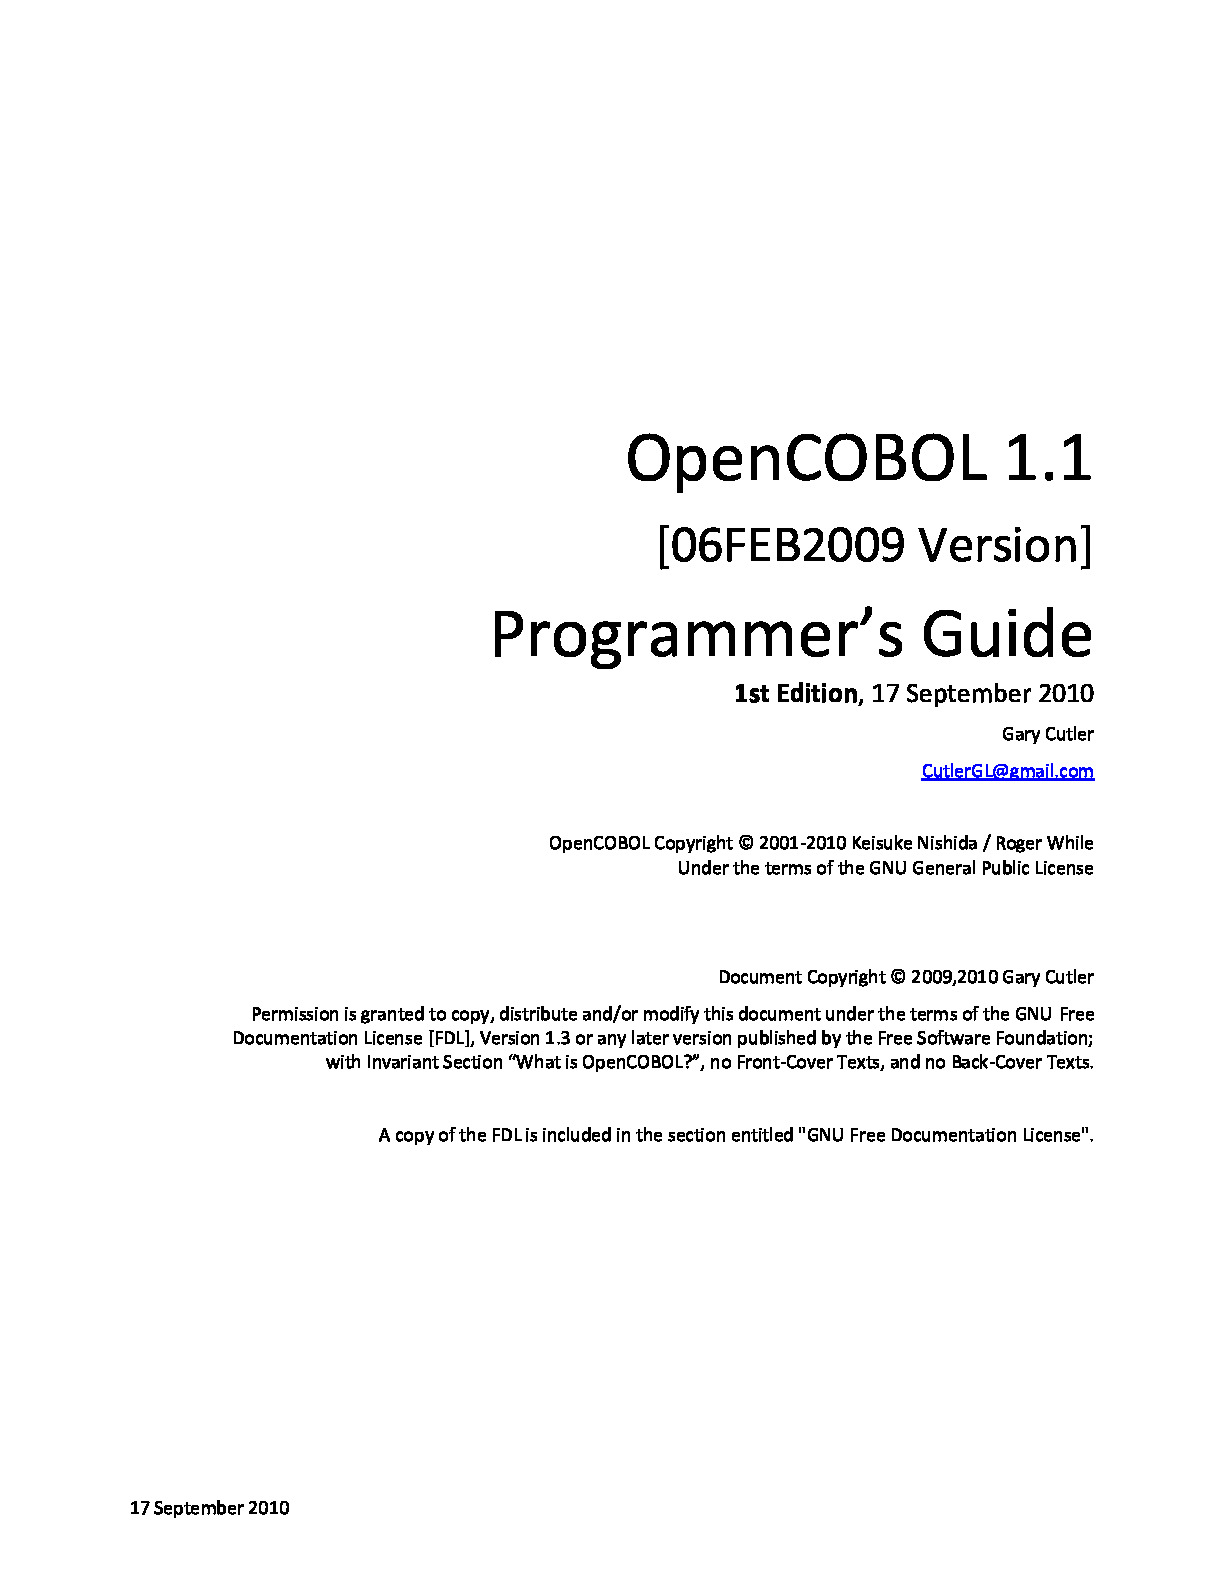 OpenCOBOL Programmers Guide